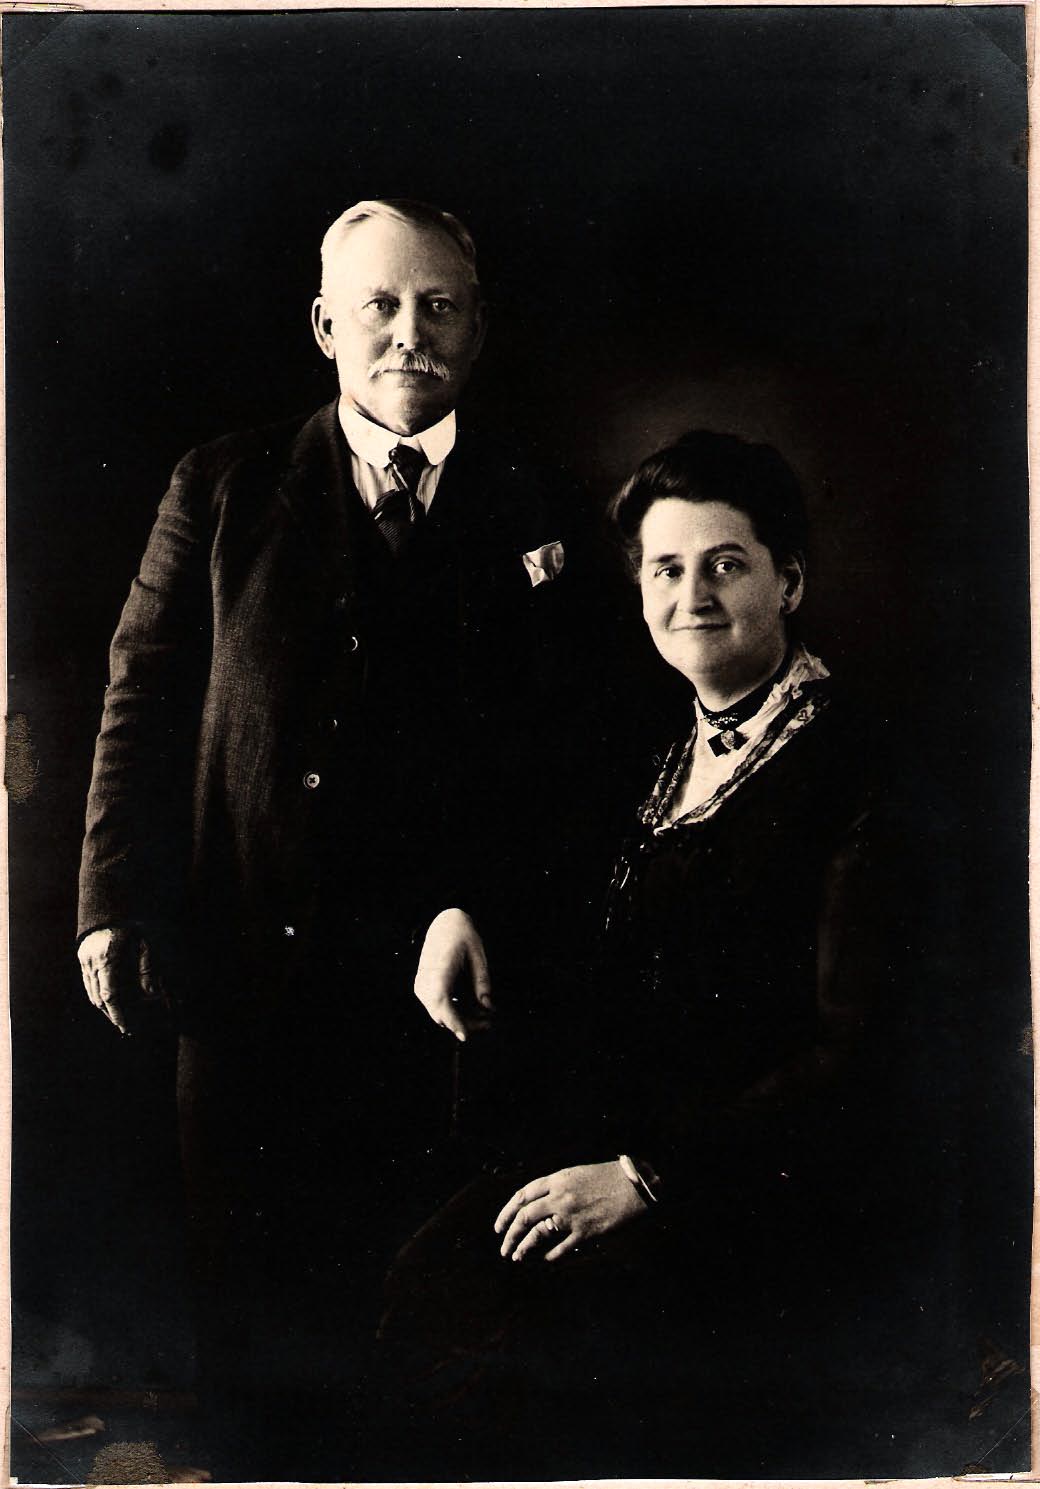 Clara SANDELL with her third husband